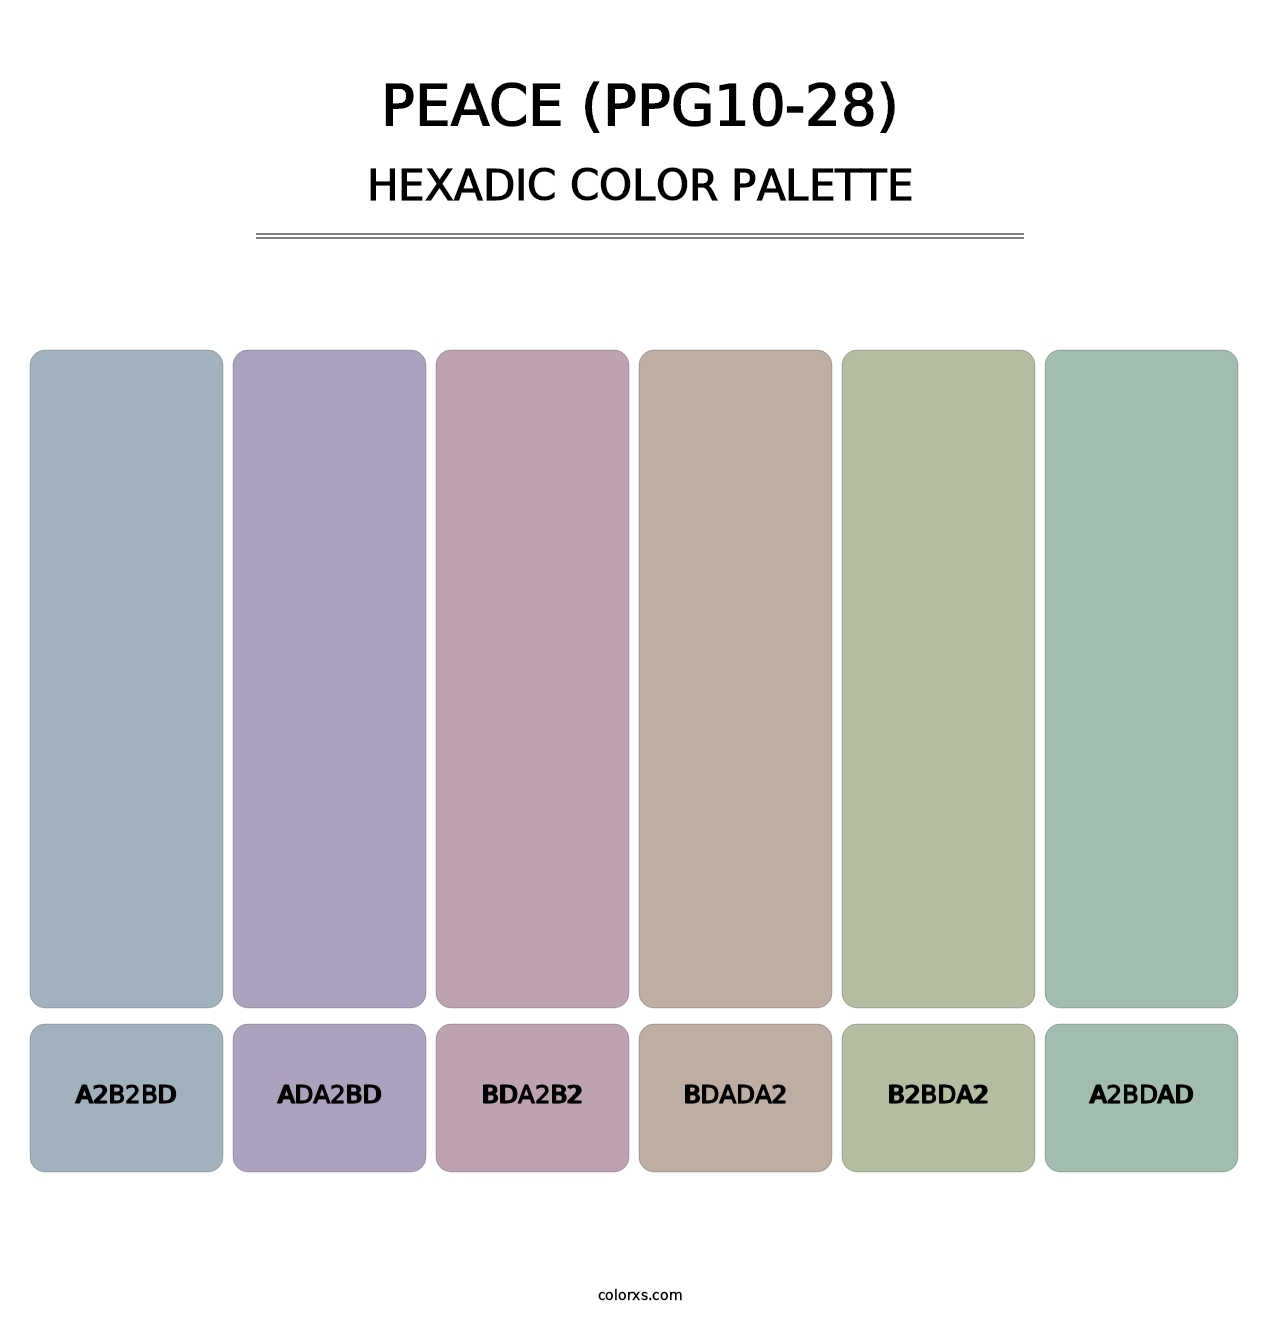 Peace (PPG10-28) - Hexadic Color Palette